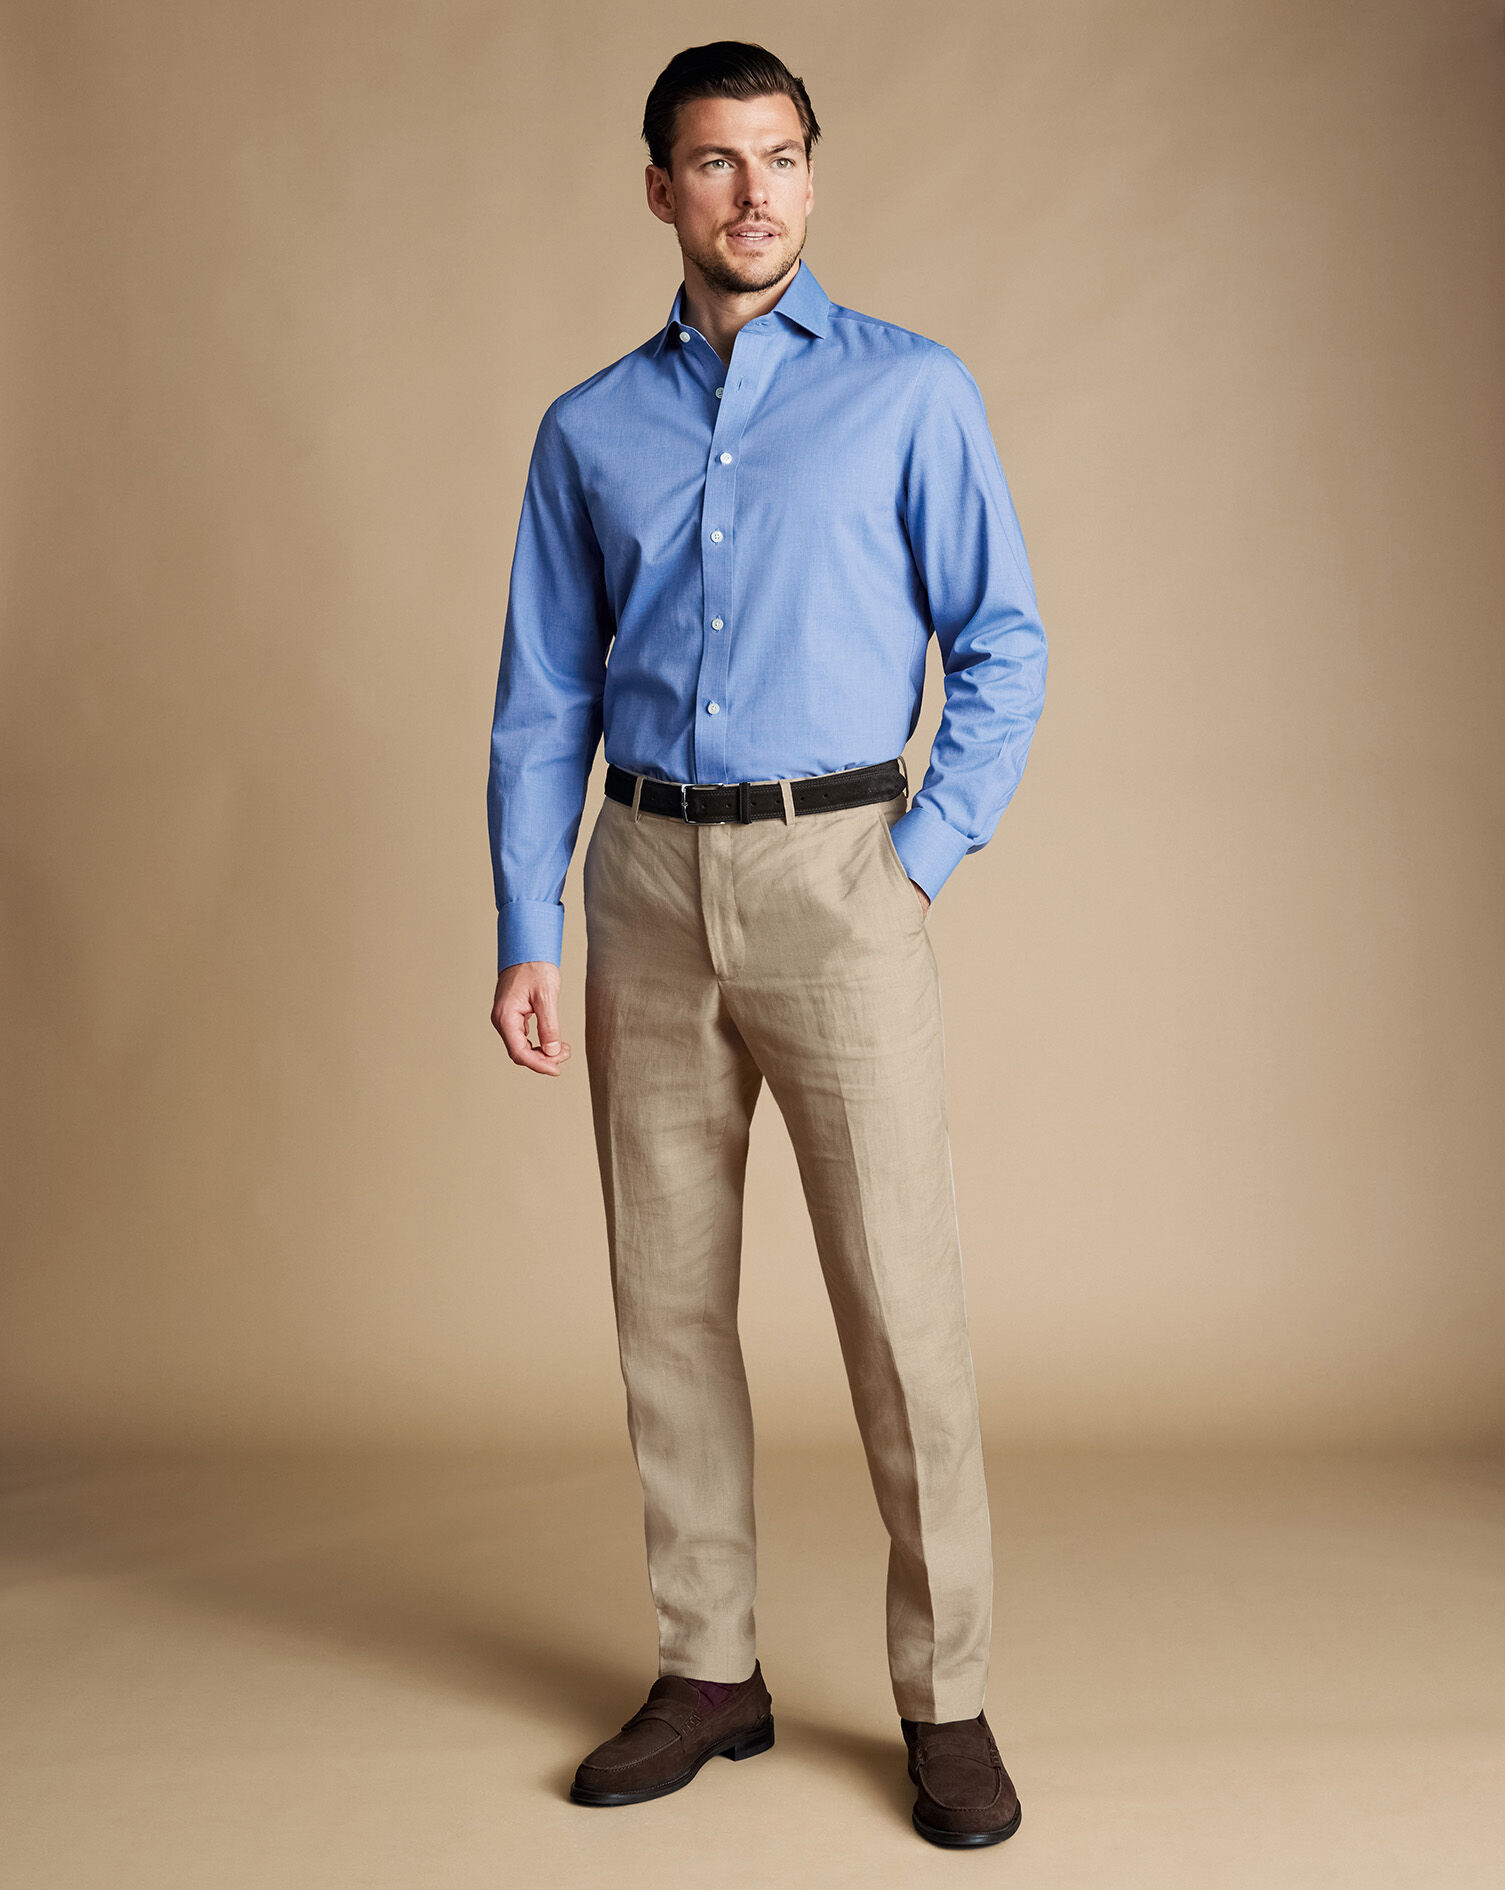 Amazon.com: Men's Long-Sleeve Work Shirt Khaki: Button Down Shirts:  Clothing, Shoes & Jewelry